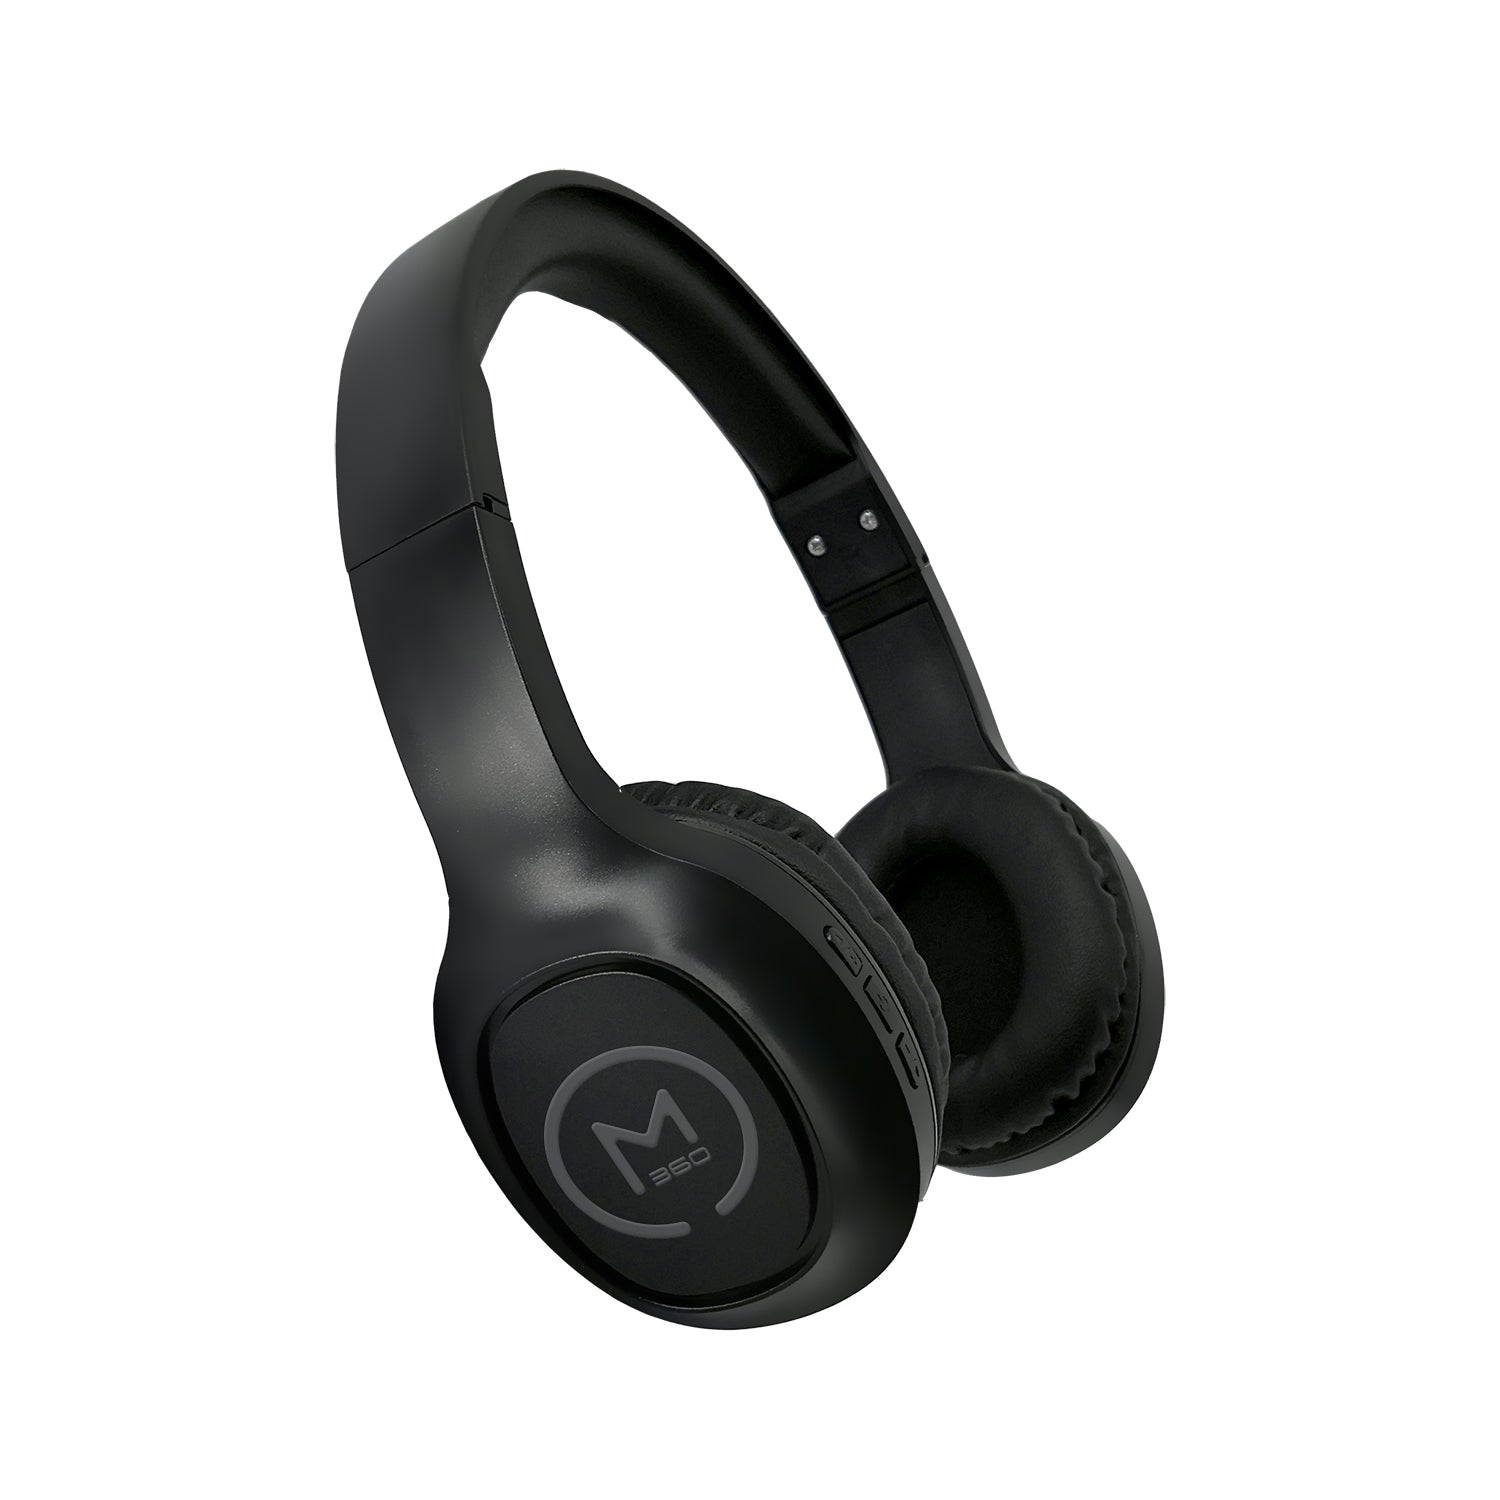 Photo of Morpheus 360 Tremors Wireless on-ear Headphones-Black, show the padded headband and plush earpads.